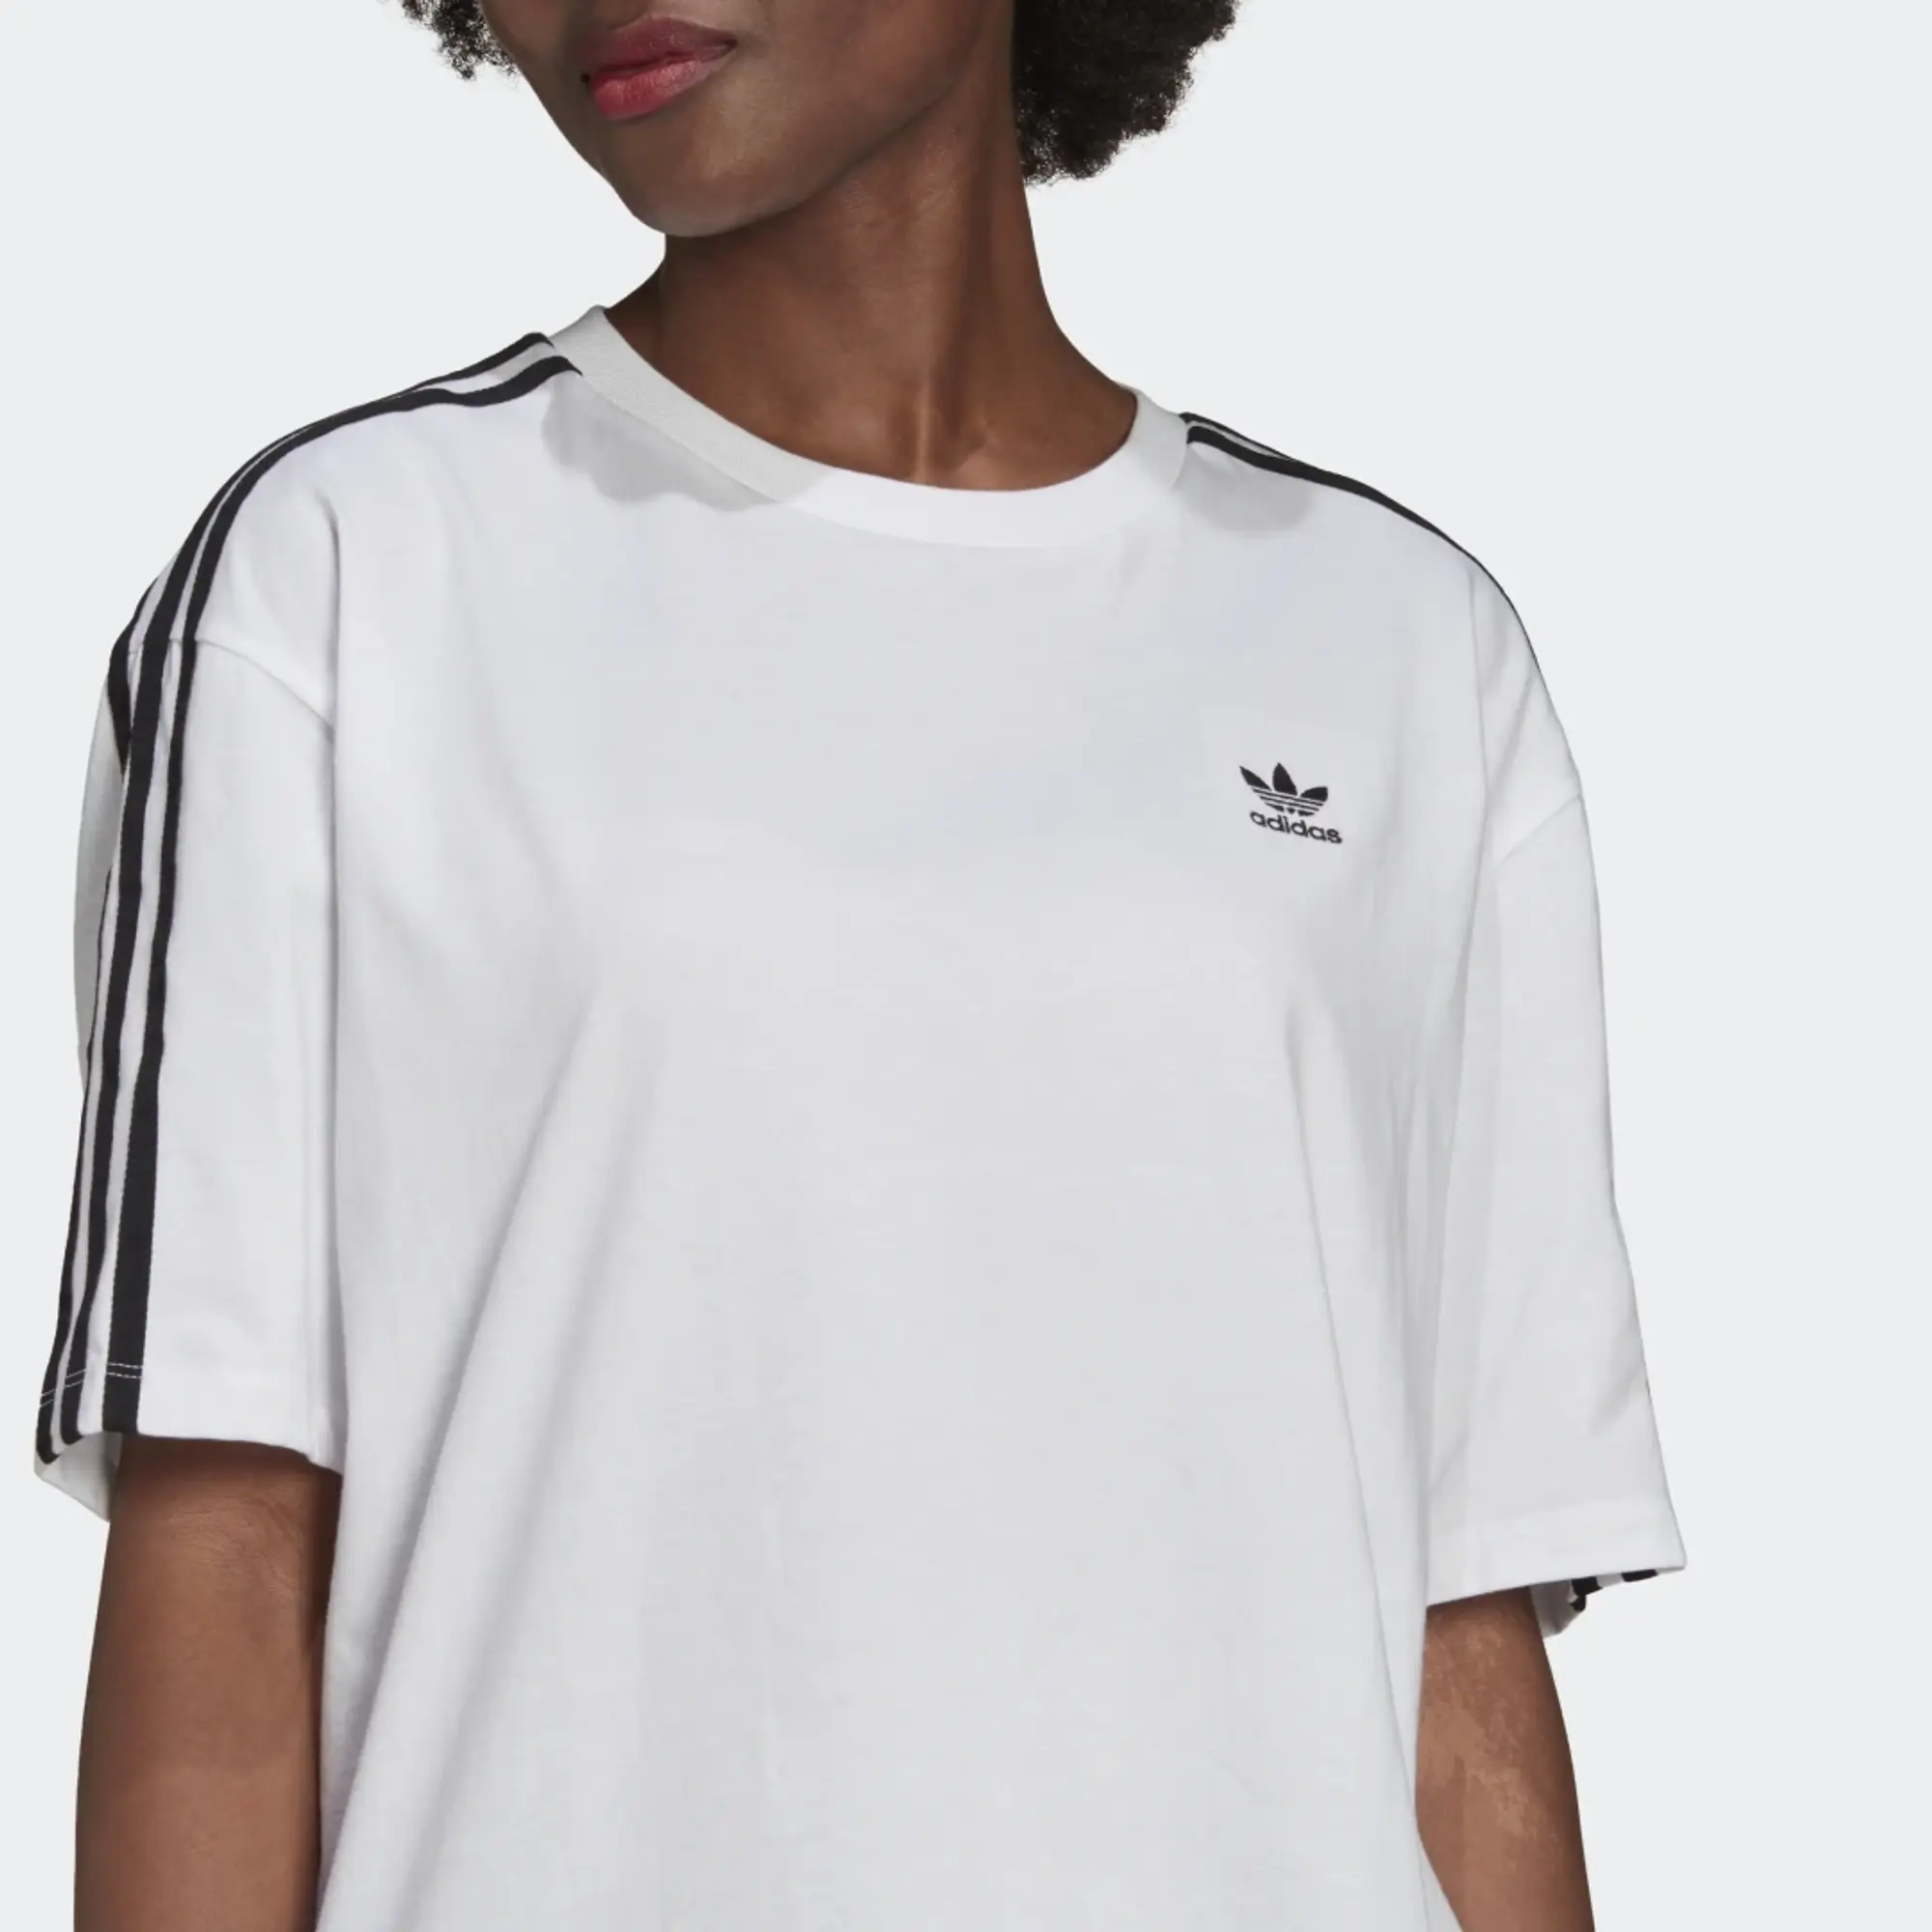 Adidas Originals White Short Sleeve T-Shirt H37796 